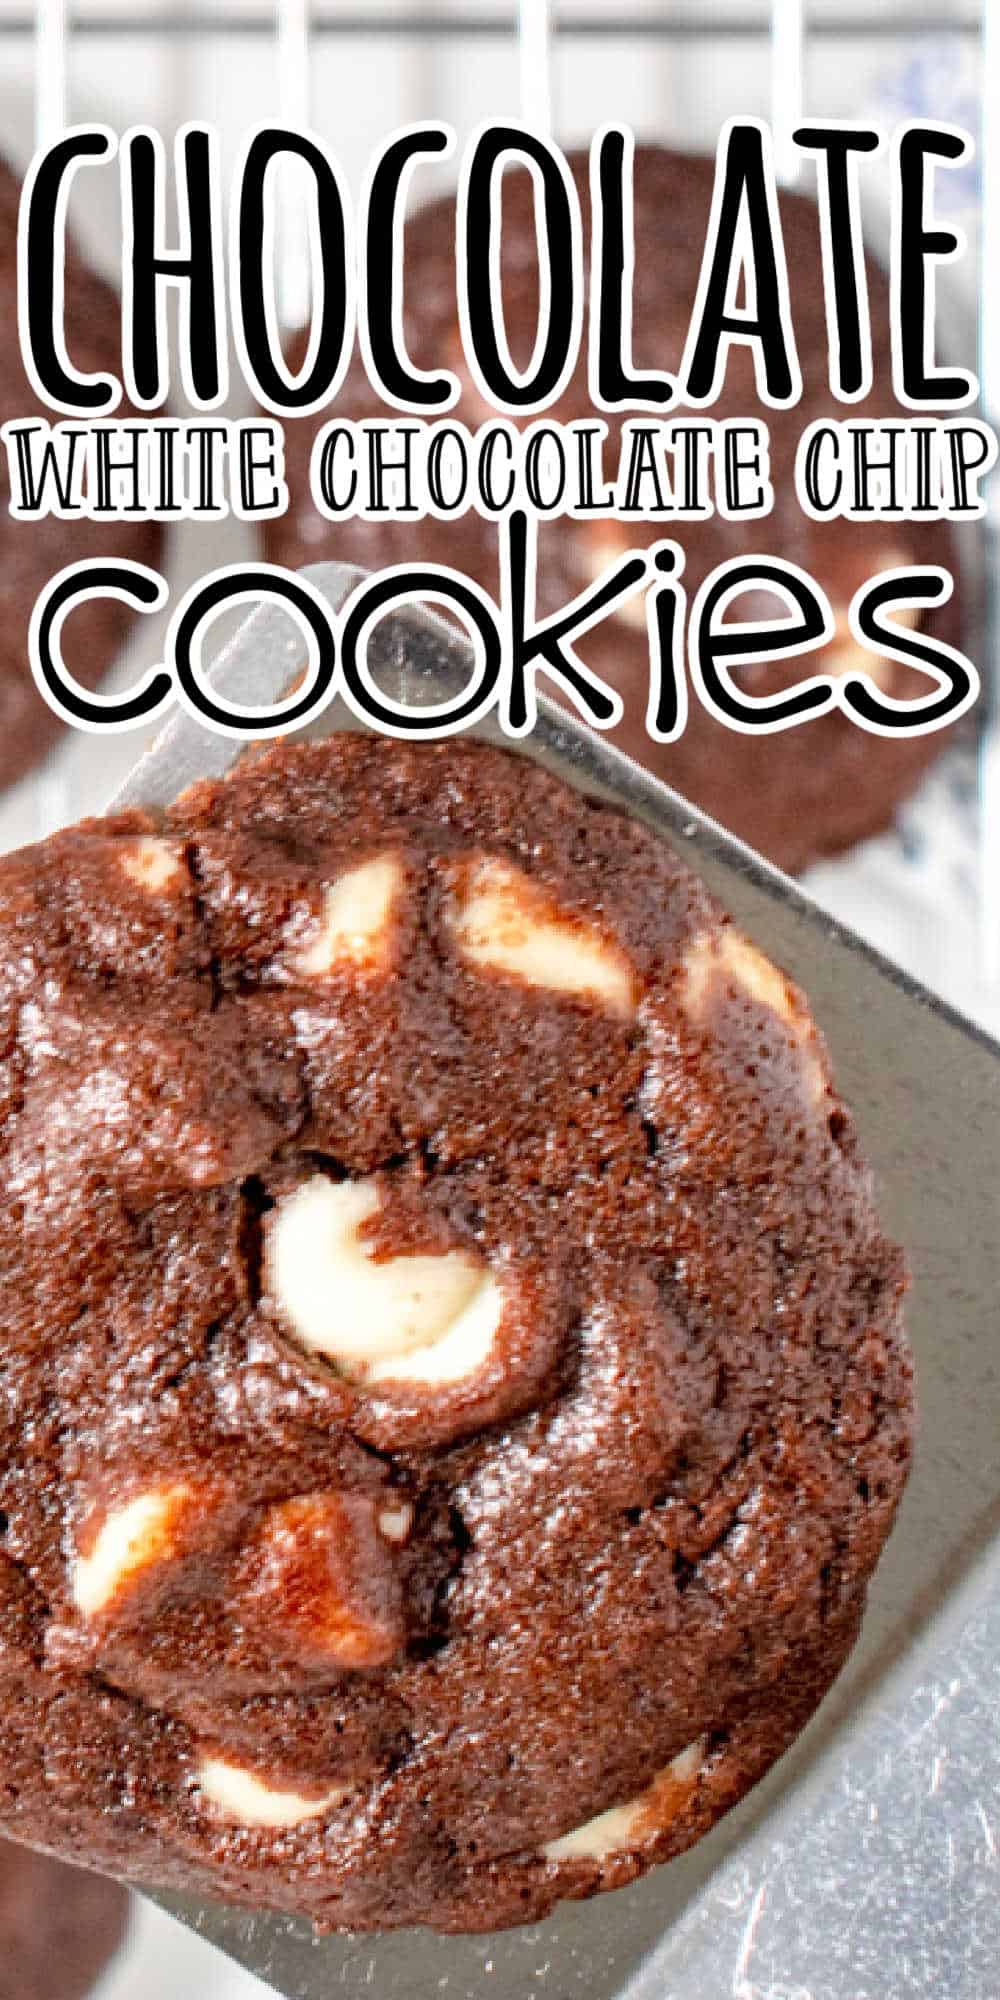 Chocolate White Chocolate Chip Cookies • MidgetMomma